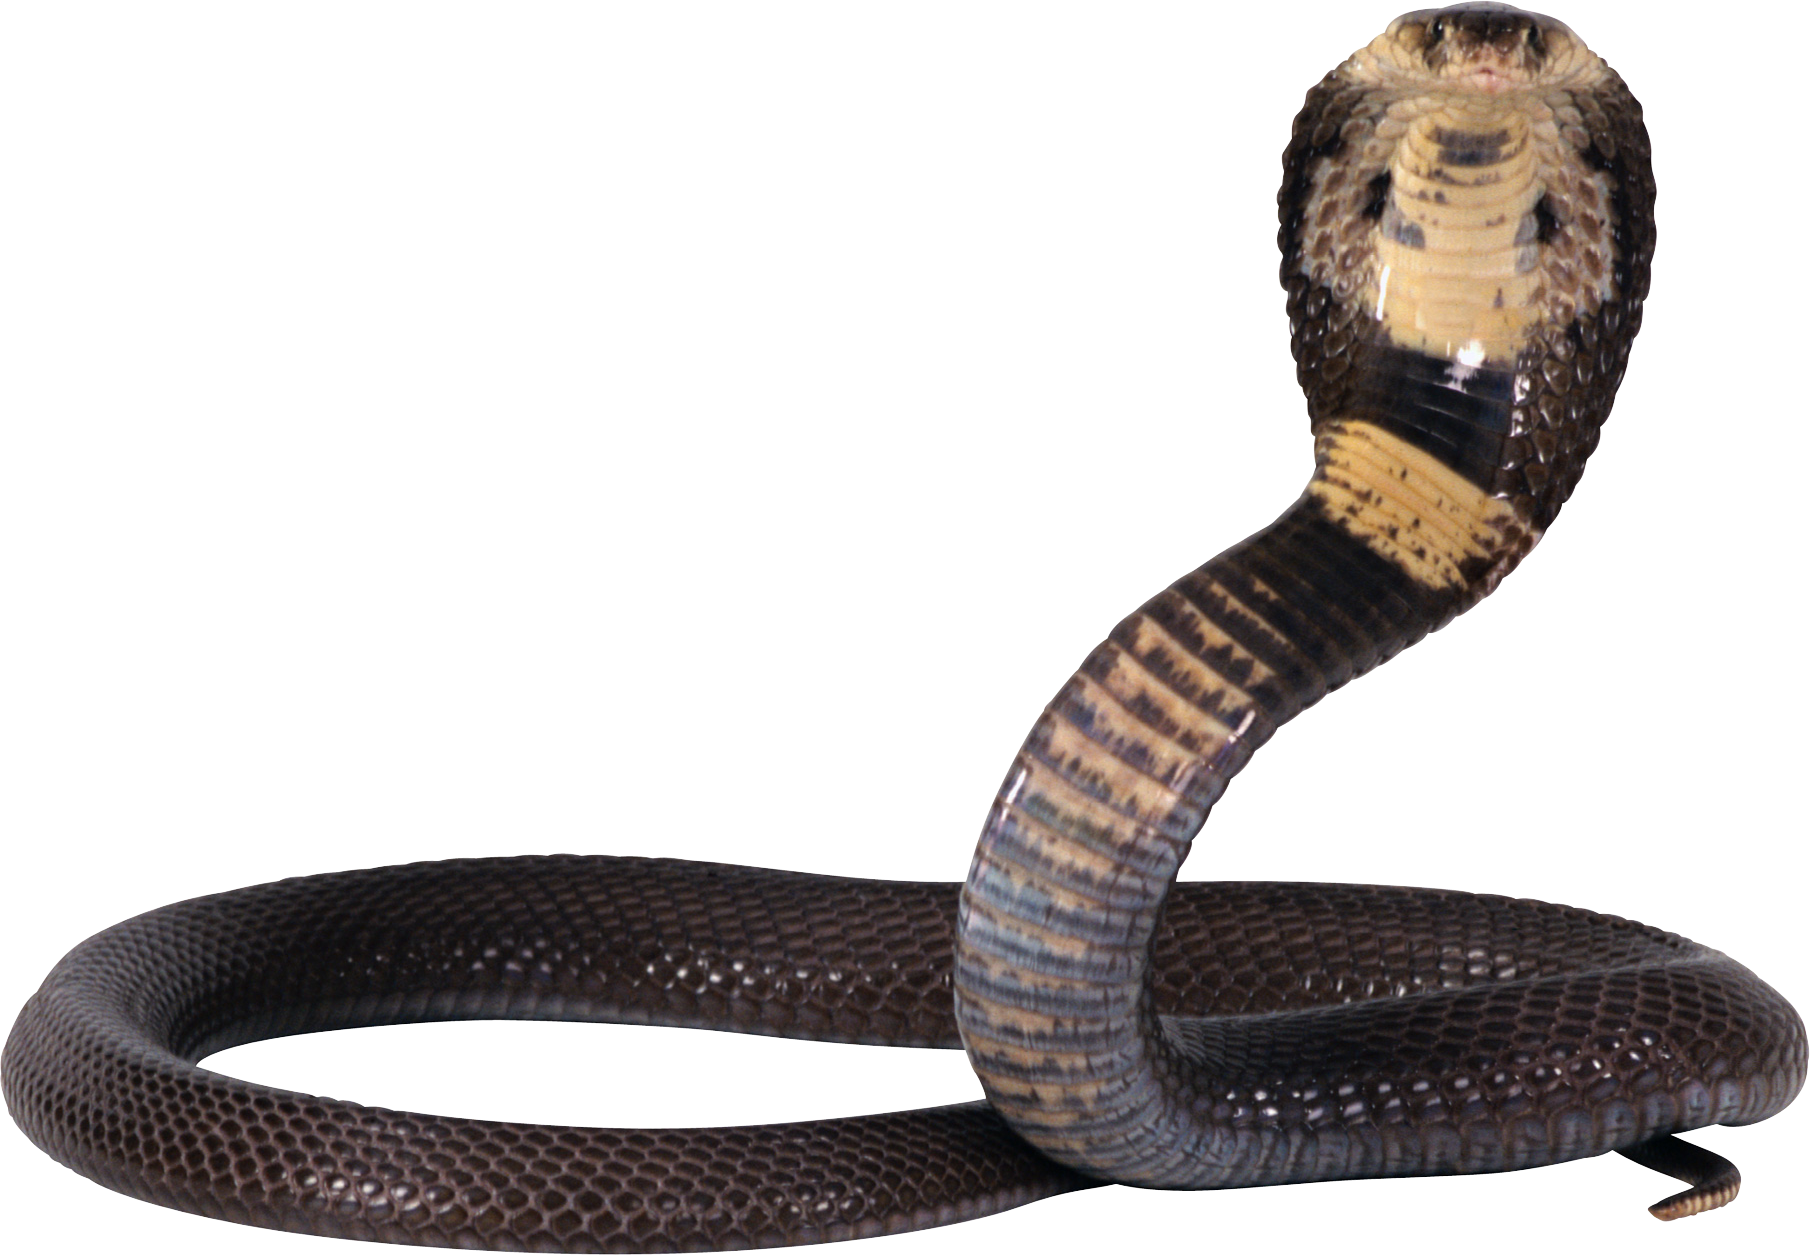 Cobra Snake Wall Art